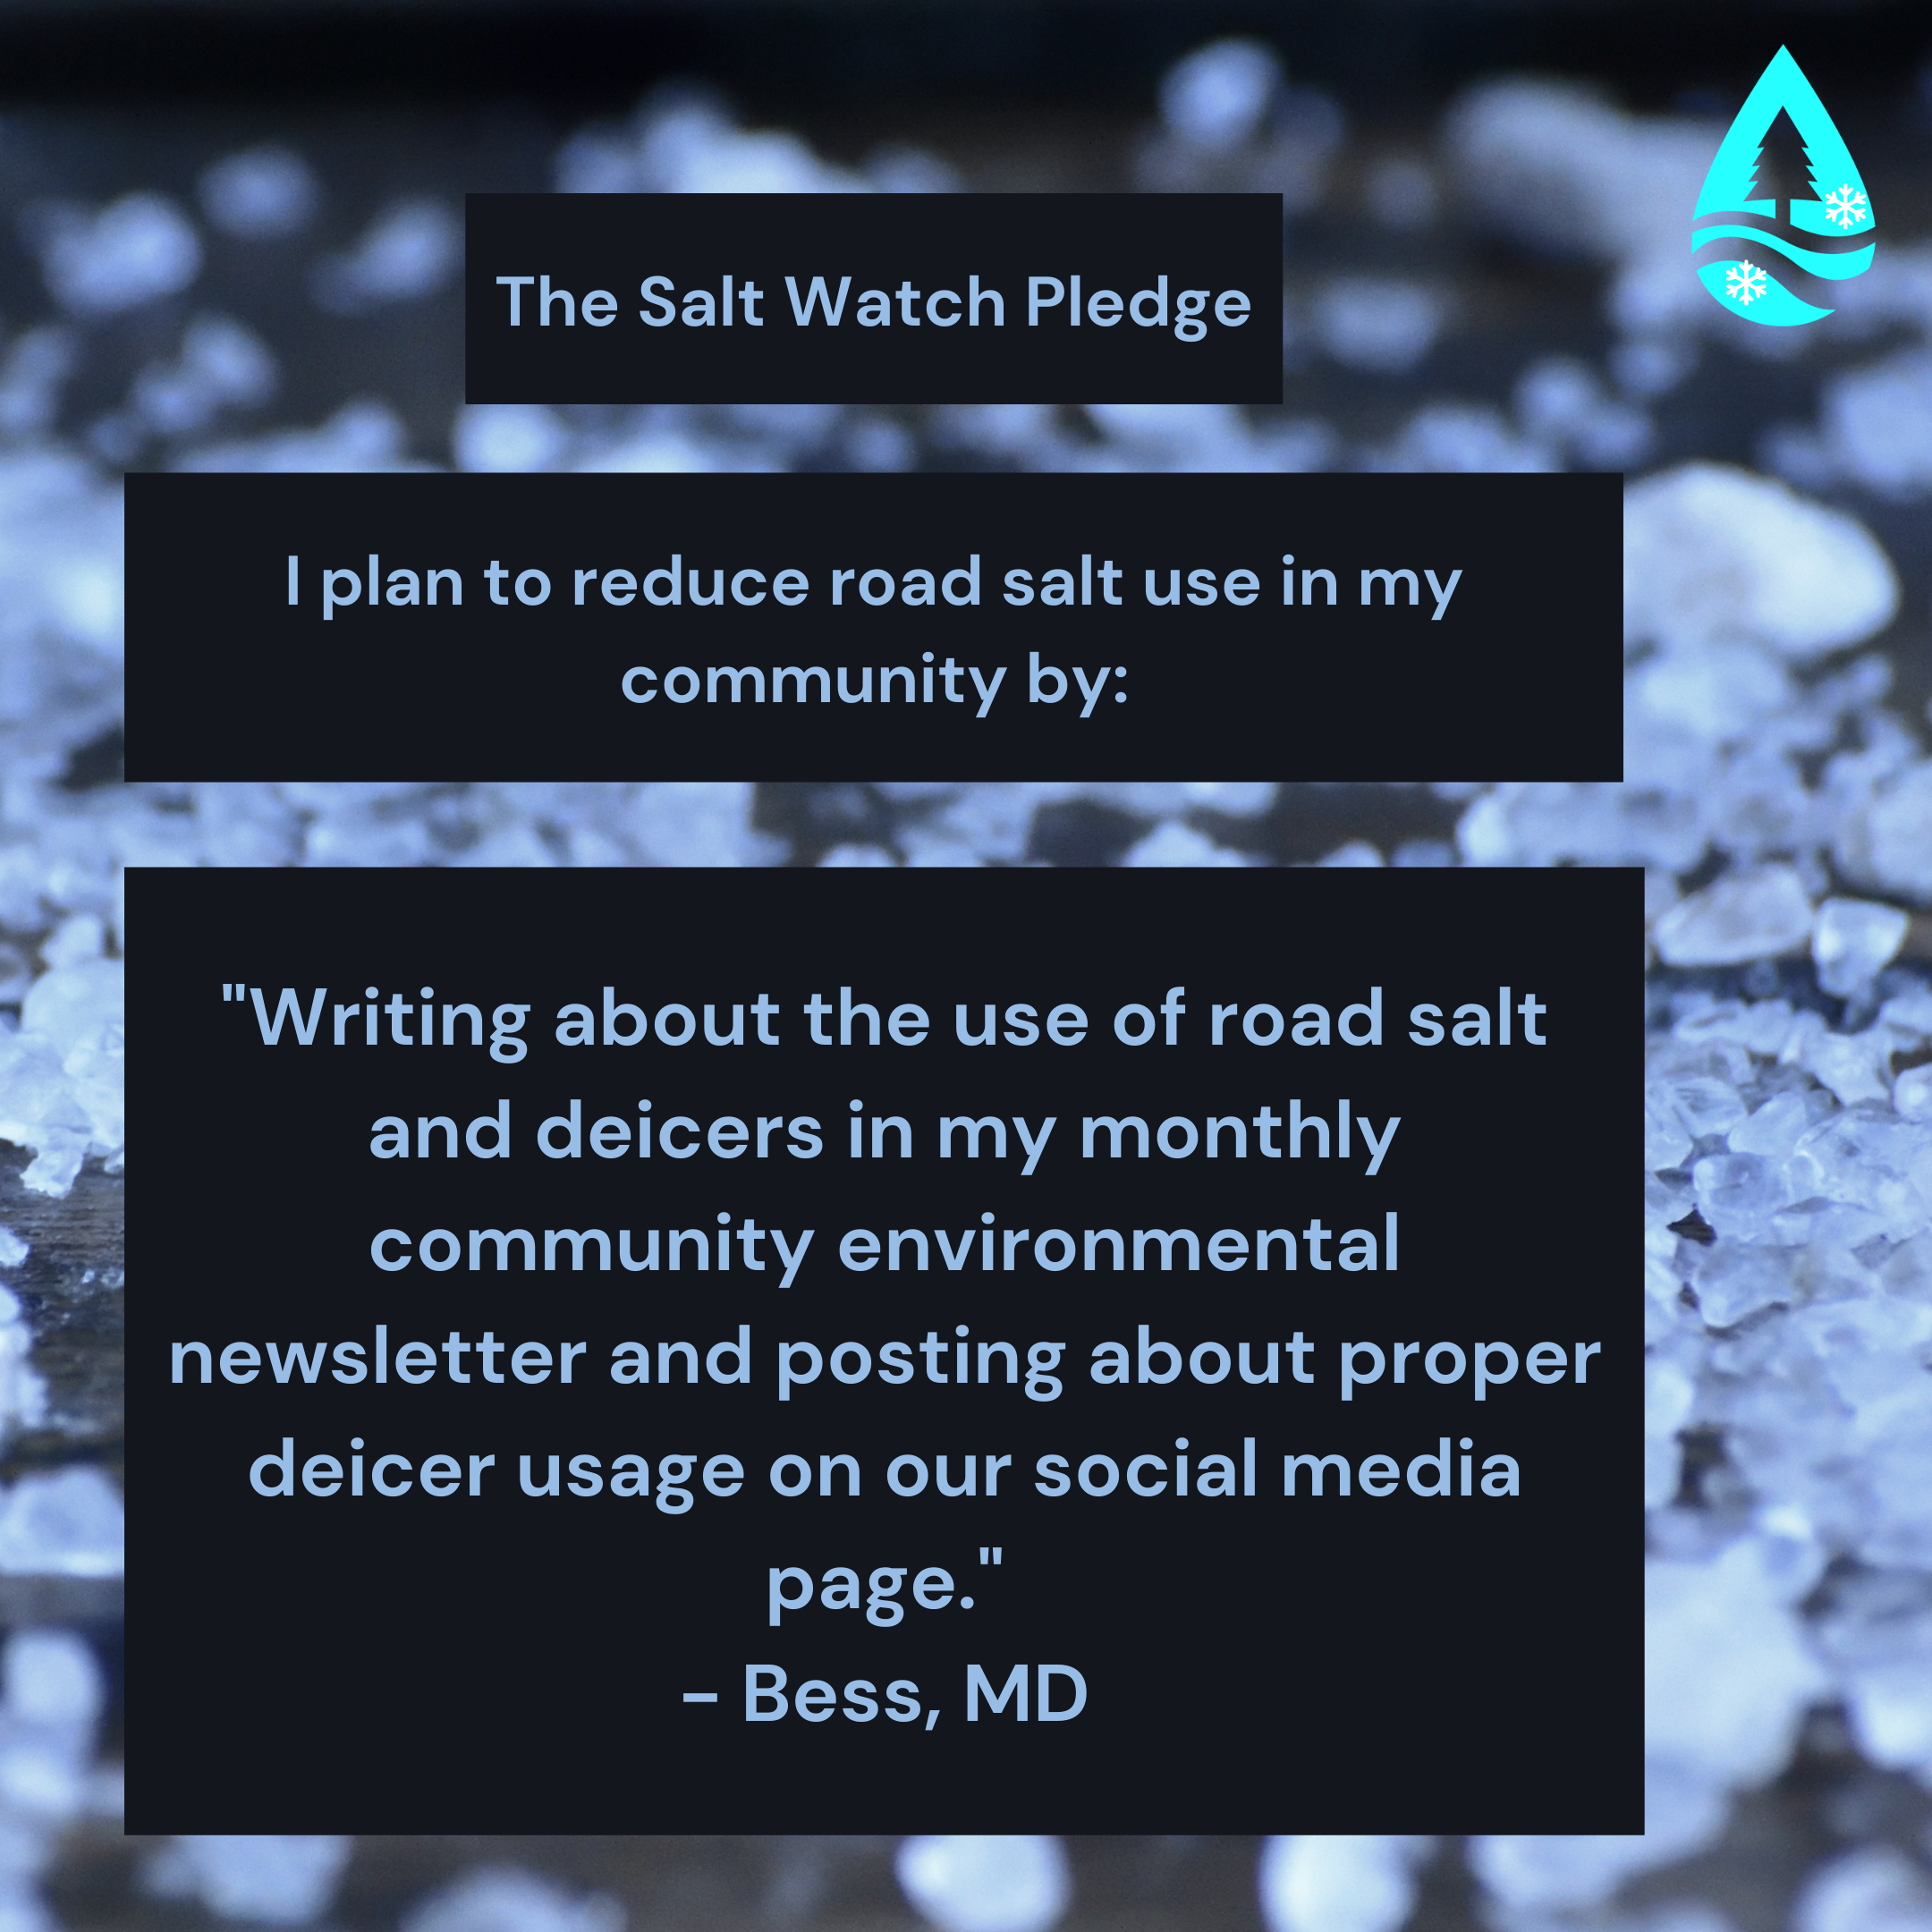 Salt Watch pledge - Bess